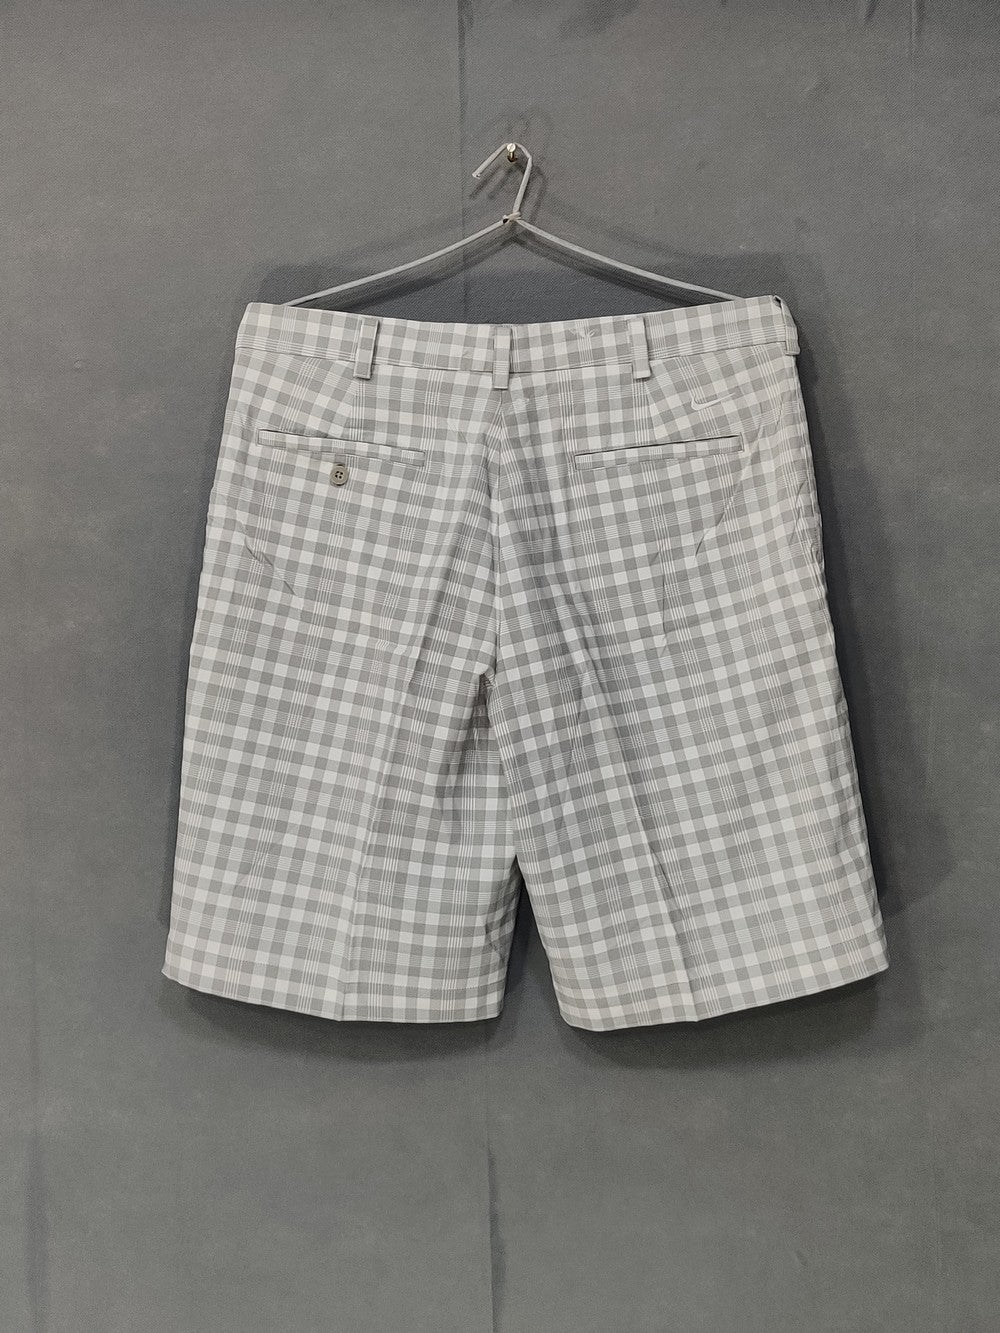 Nike Golf Branded Original Cotton Short For Men